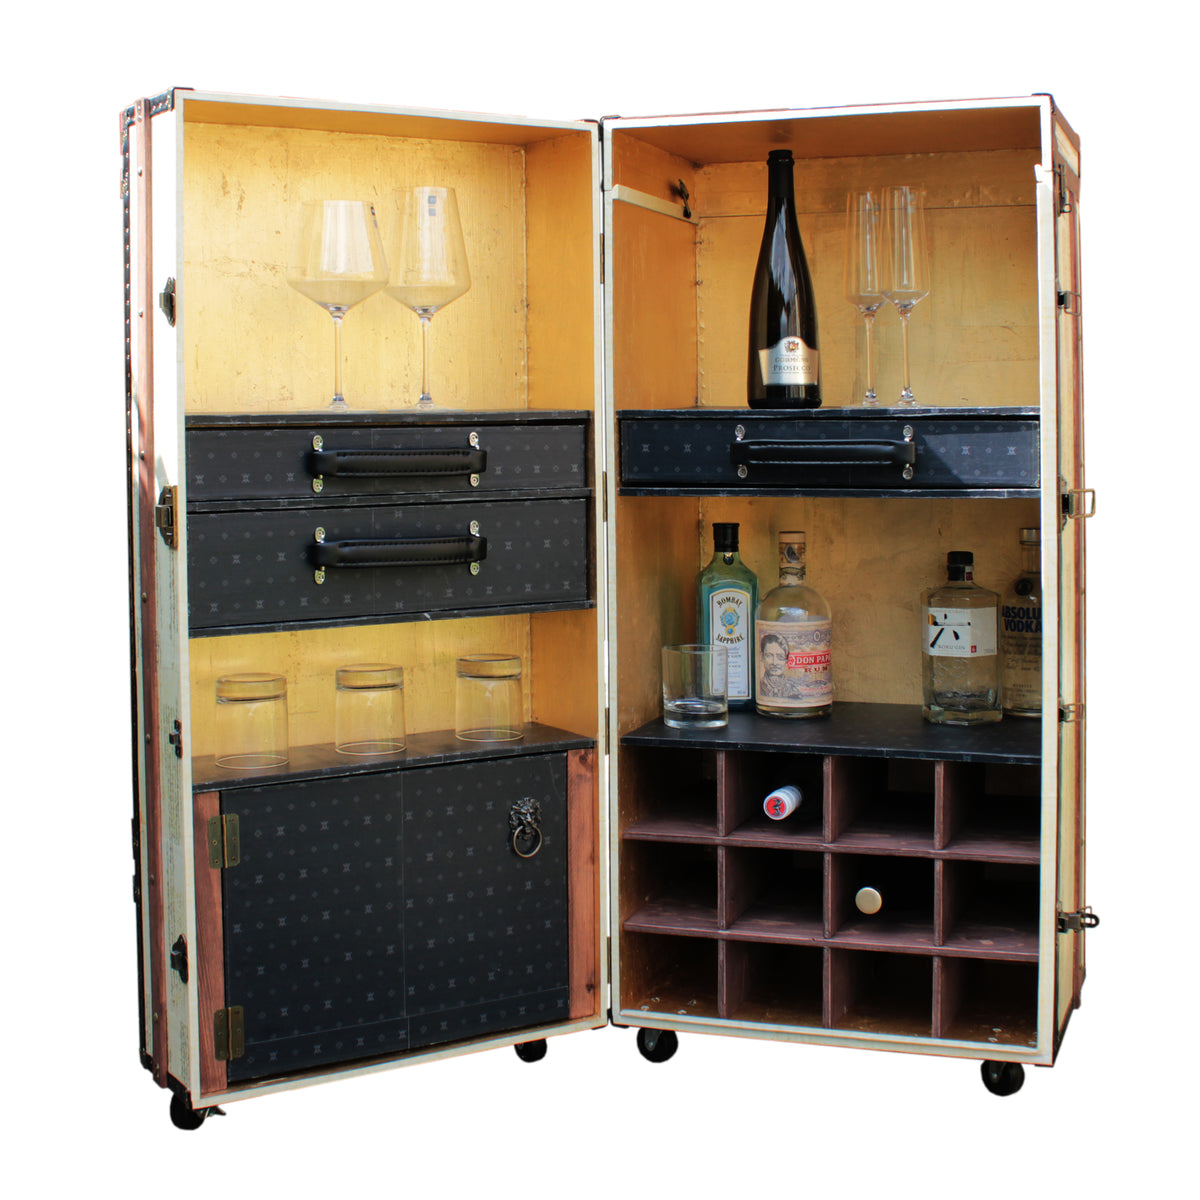 Mark's DIY Steamer Trunk Wine & Liquor Cabinet